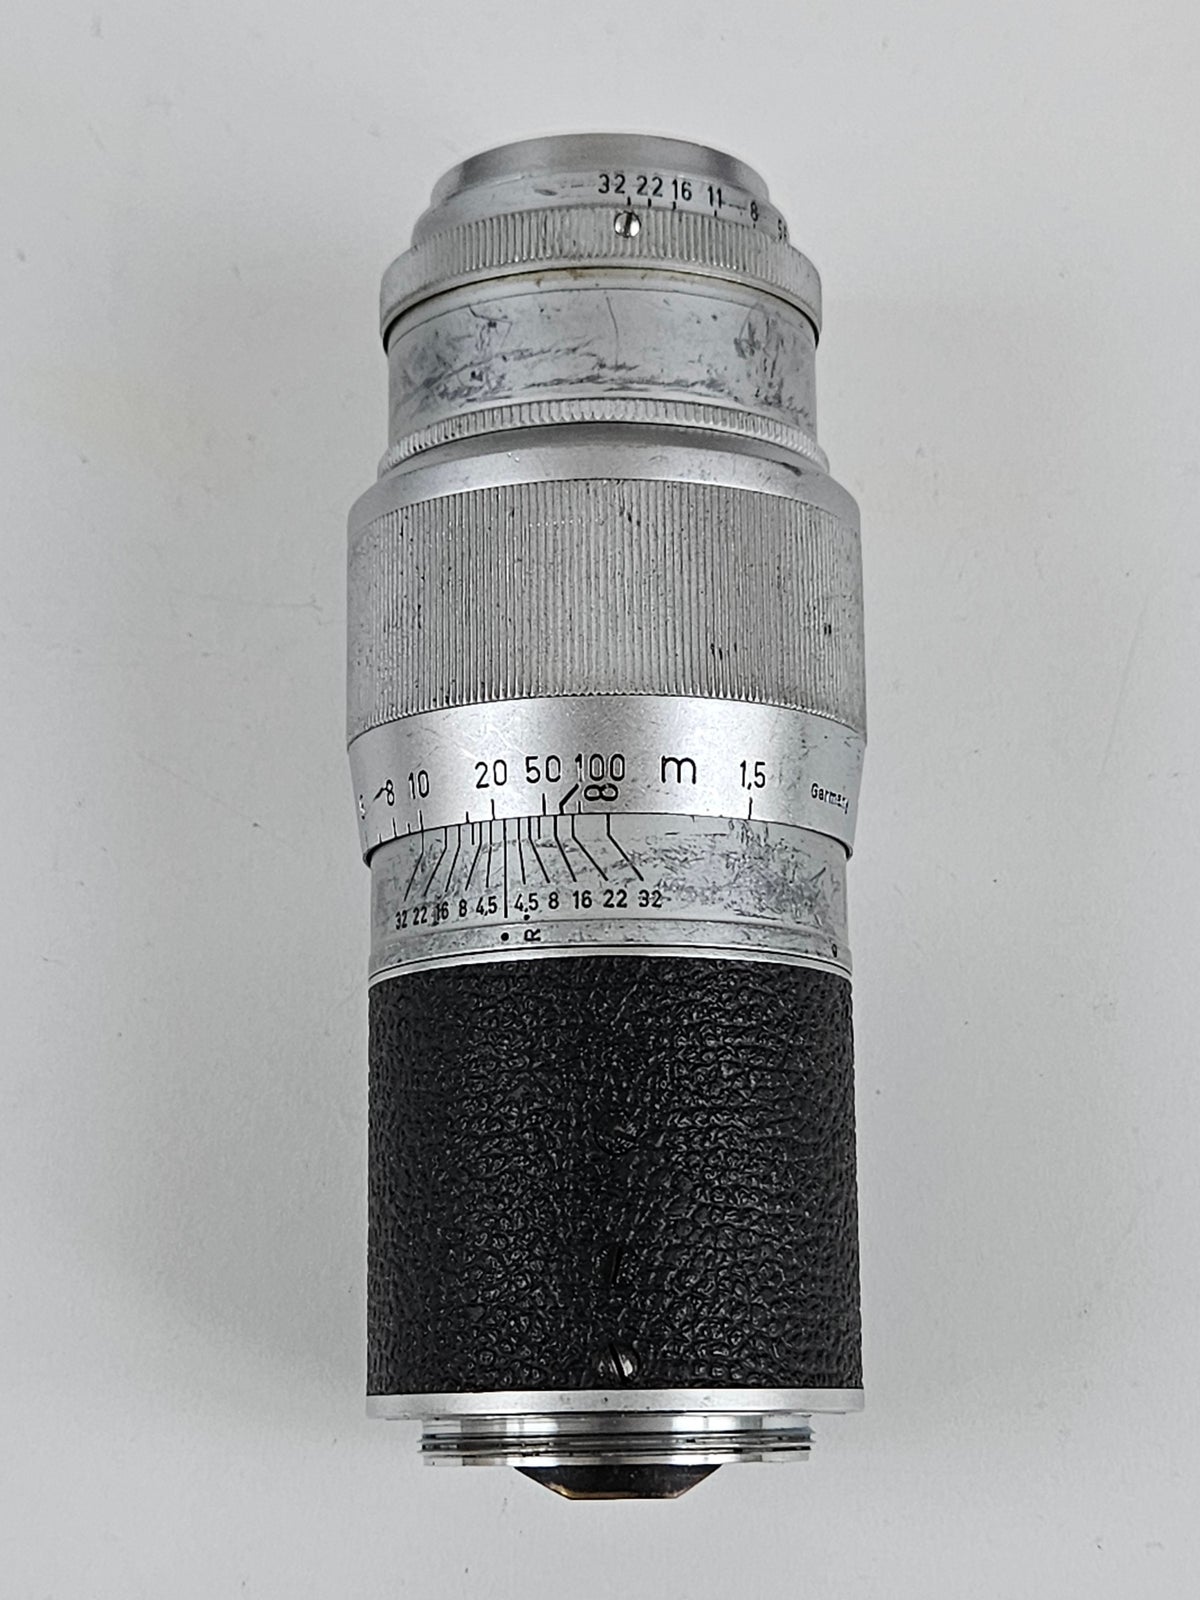 Tele, Leica, Hektor 135/4.5 L39